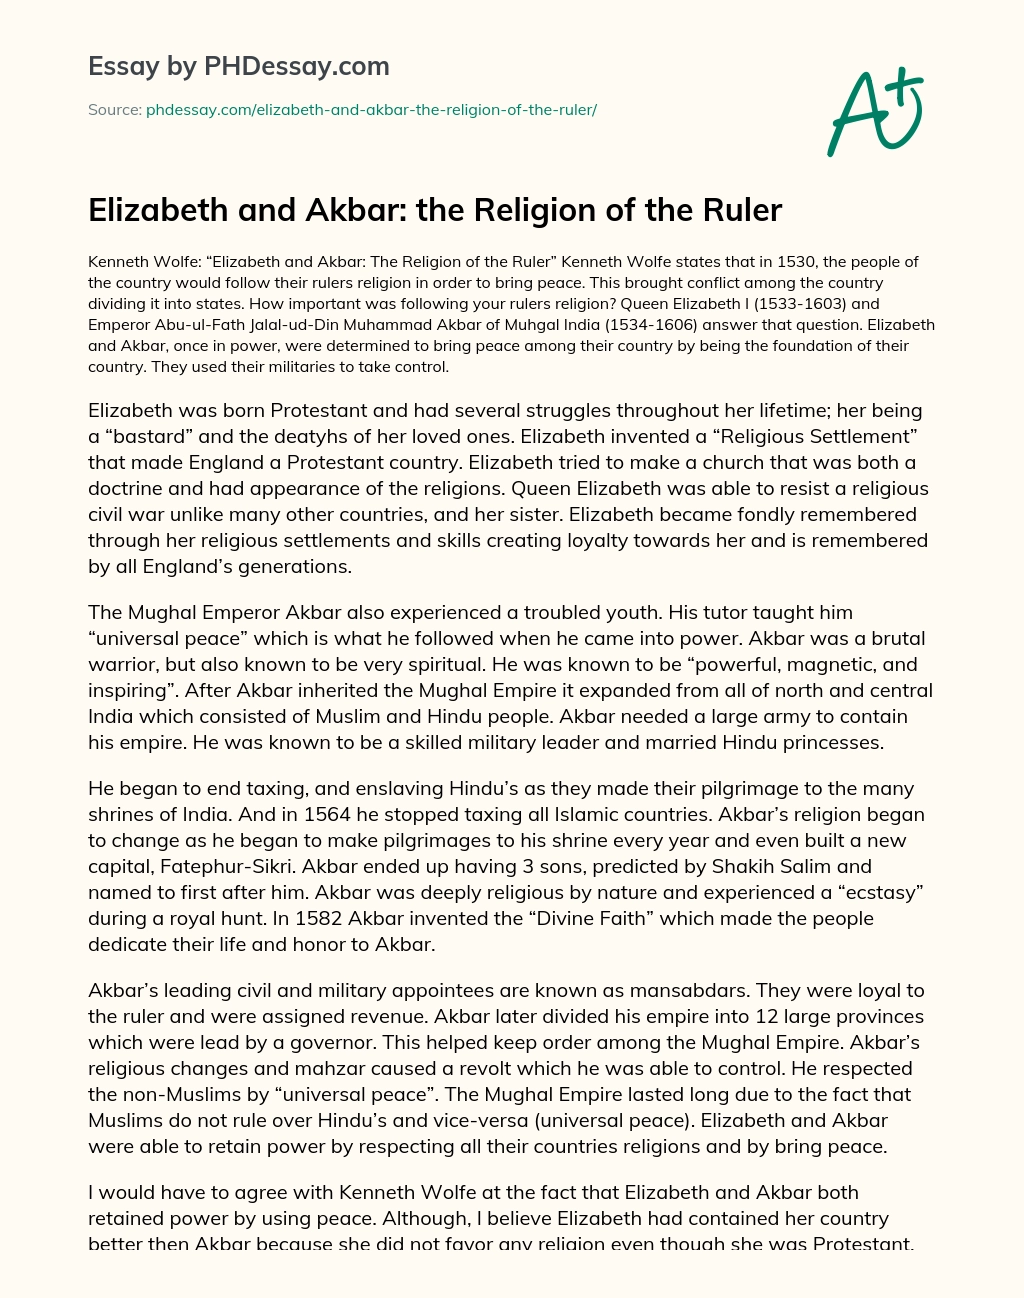 Elizabeth and Akbar: the Religion of the Ruler essay